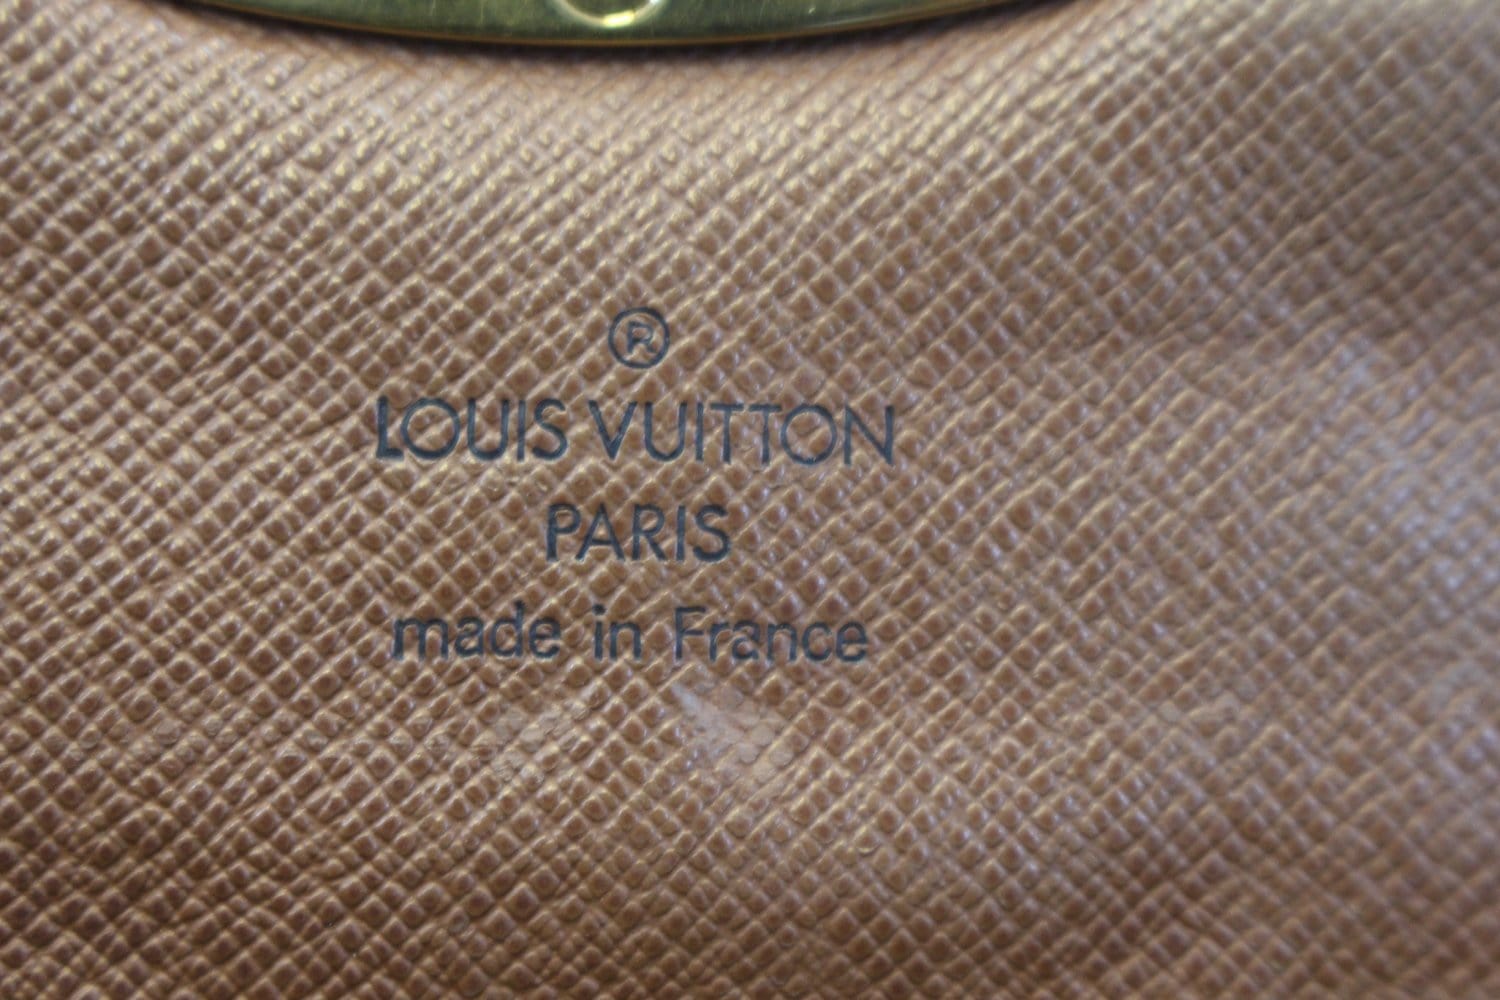 Louis Vuitton Birth Set Pétale Cashmere knitted. Size 3 Months